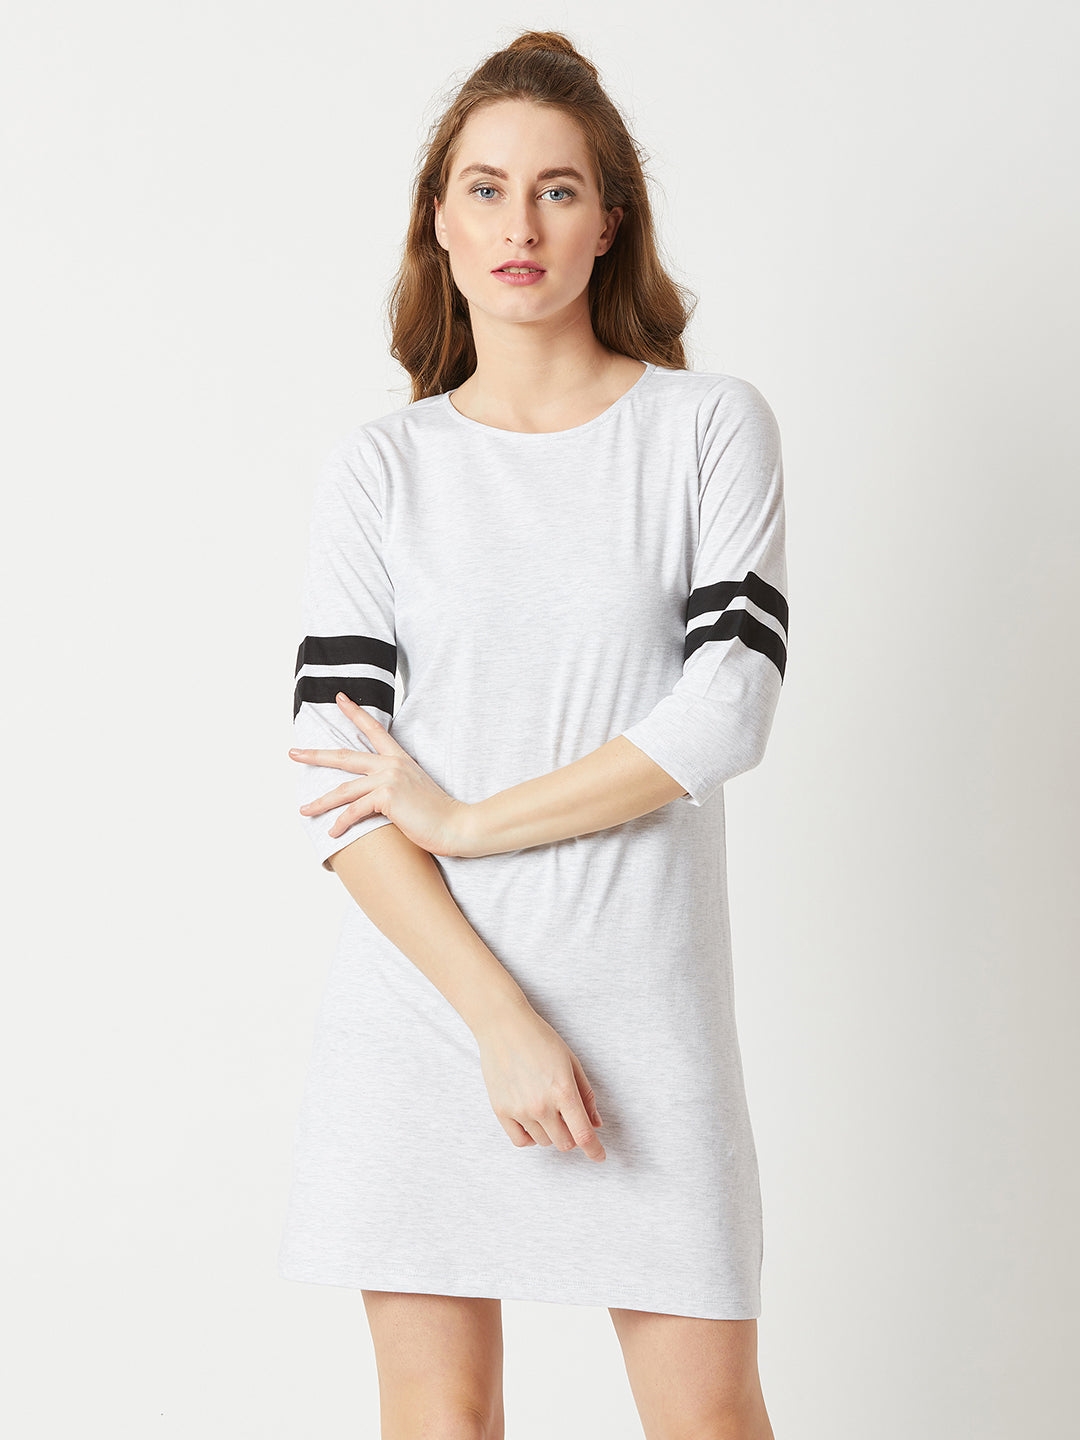 Women's Grey Cotton SolidCasualwear Shift Dress